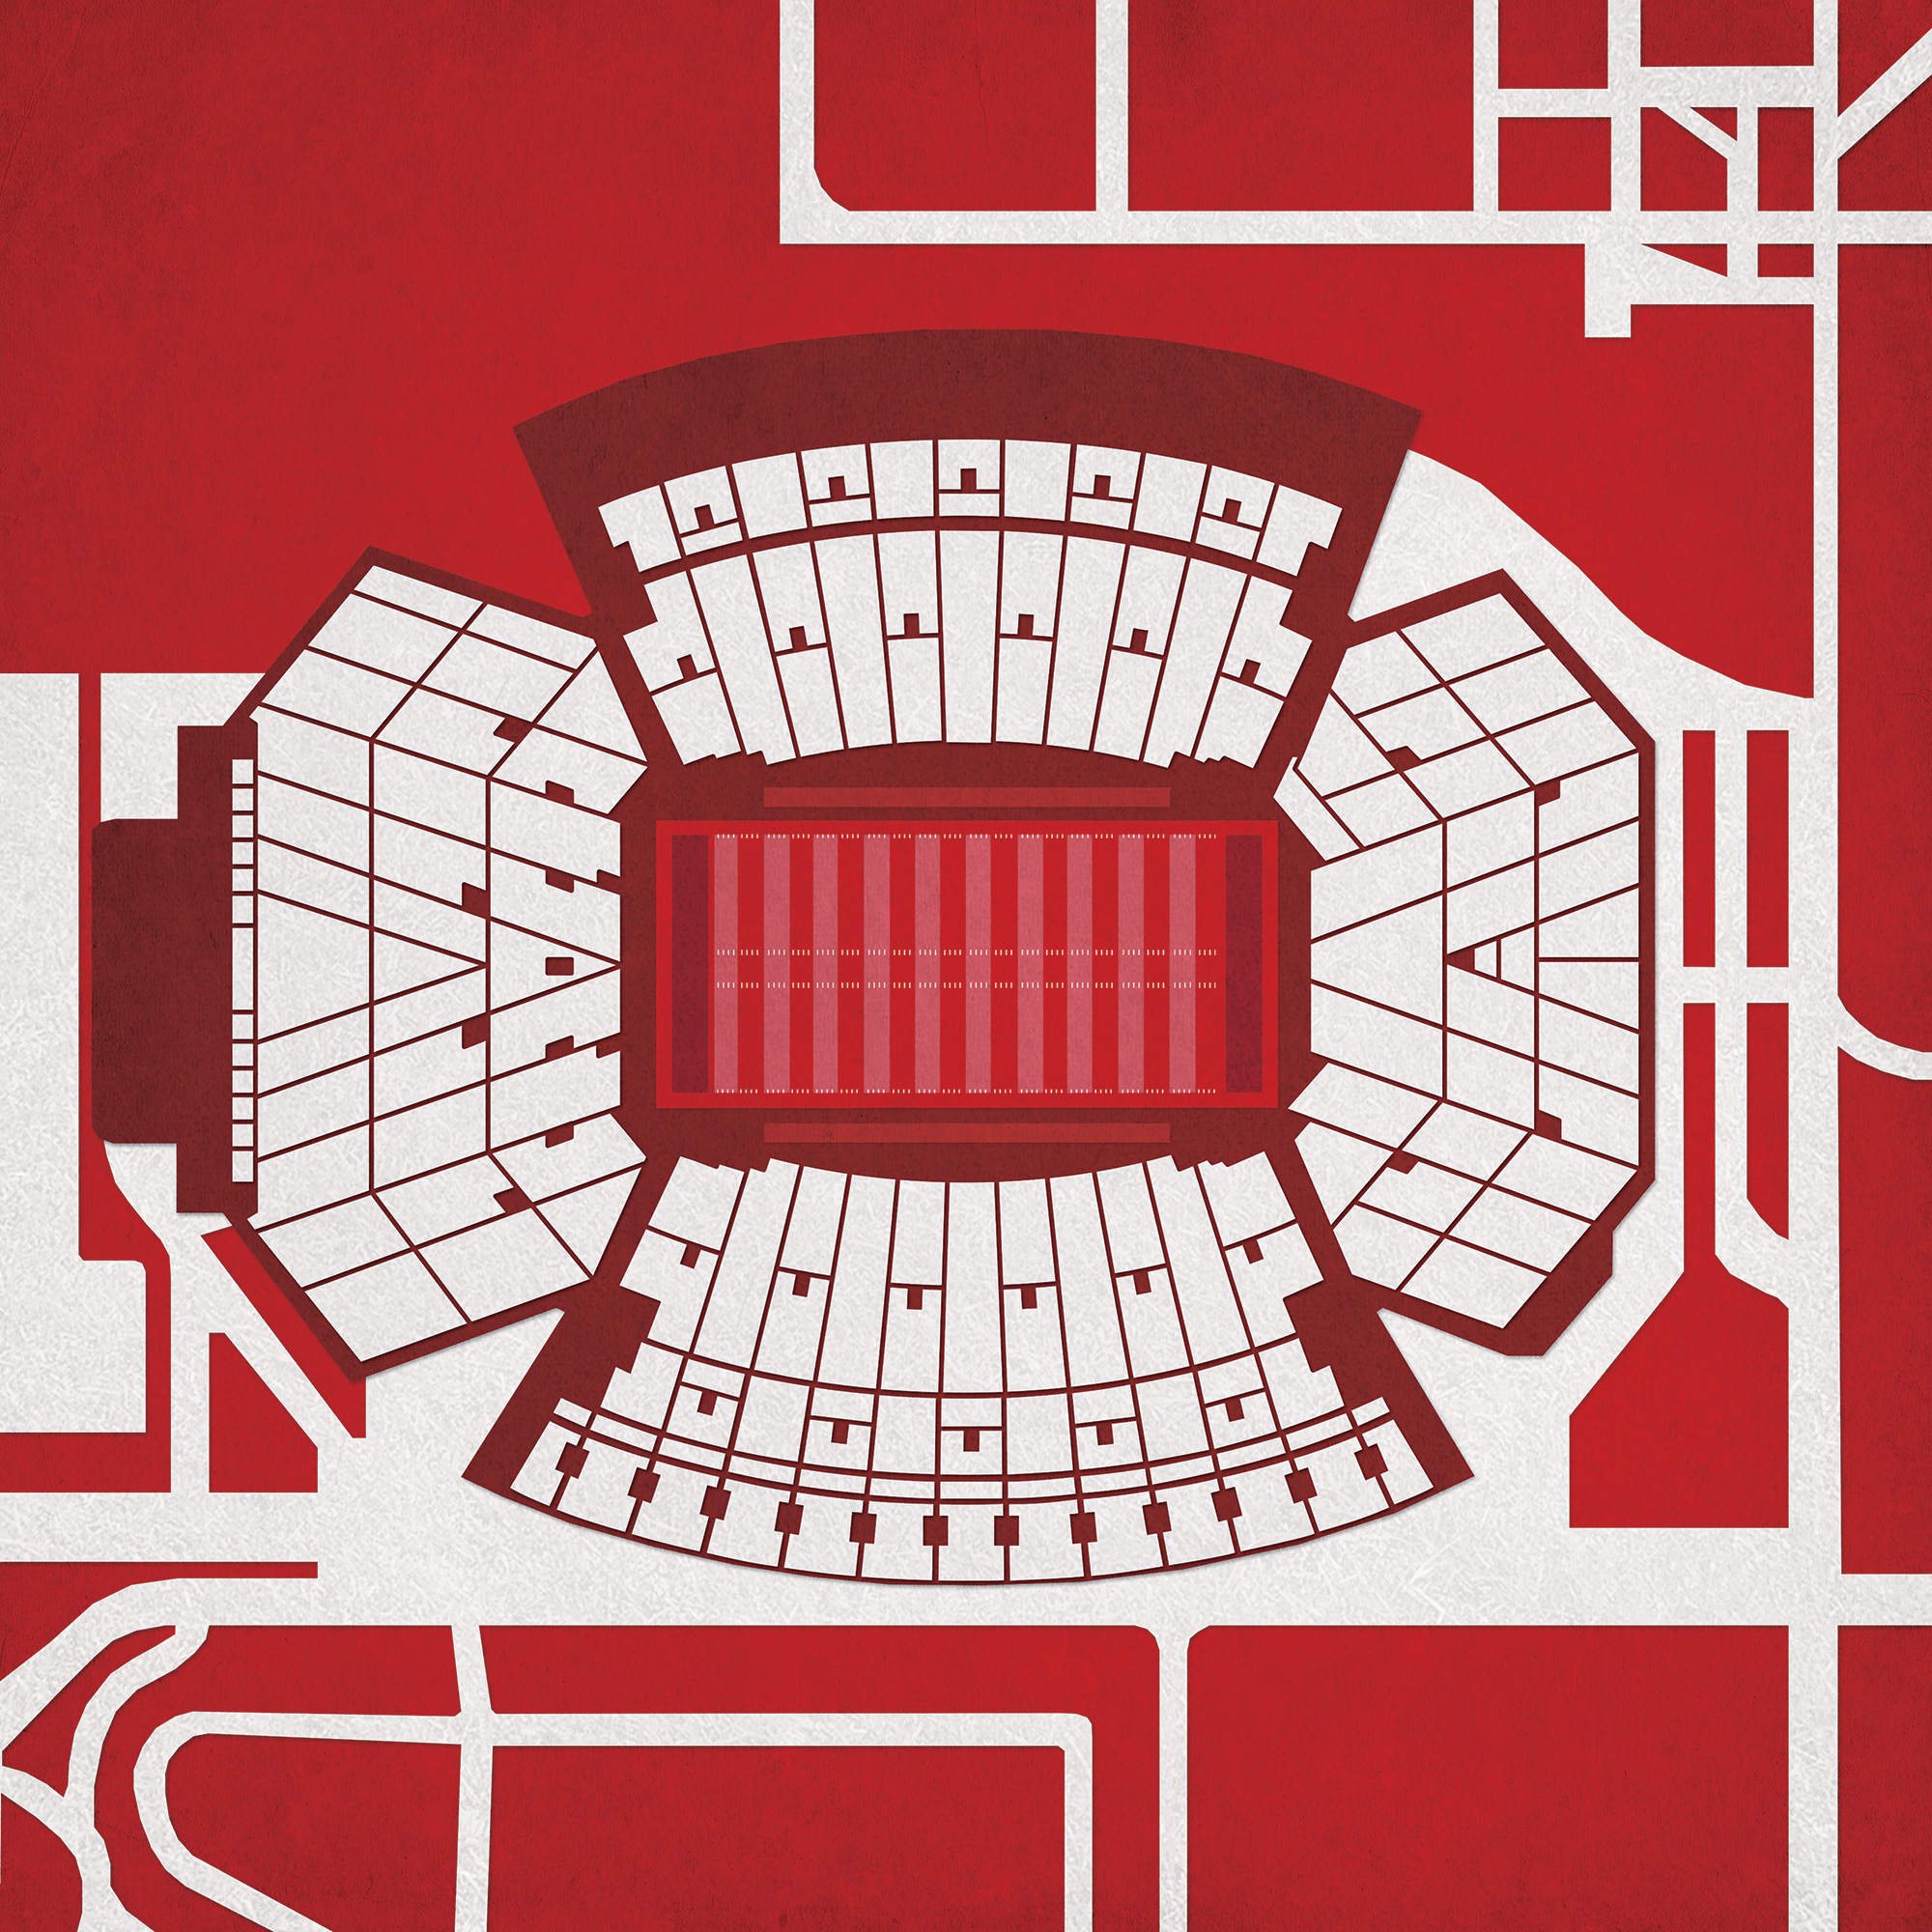 Hillenbrand Memorial Stadium Seating Chart